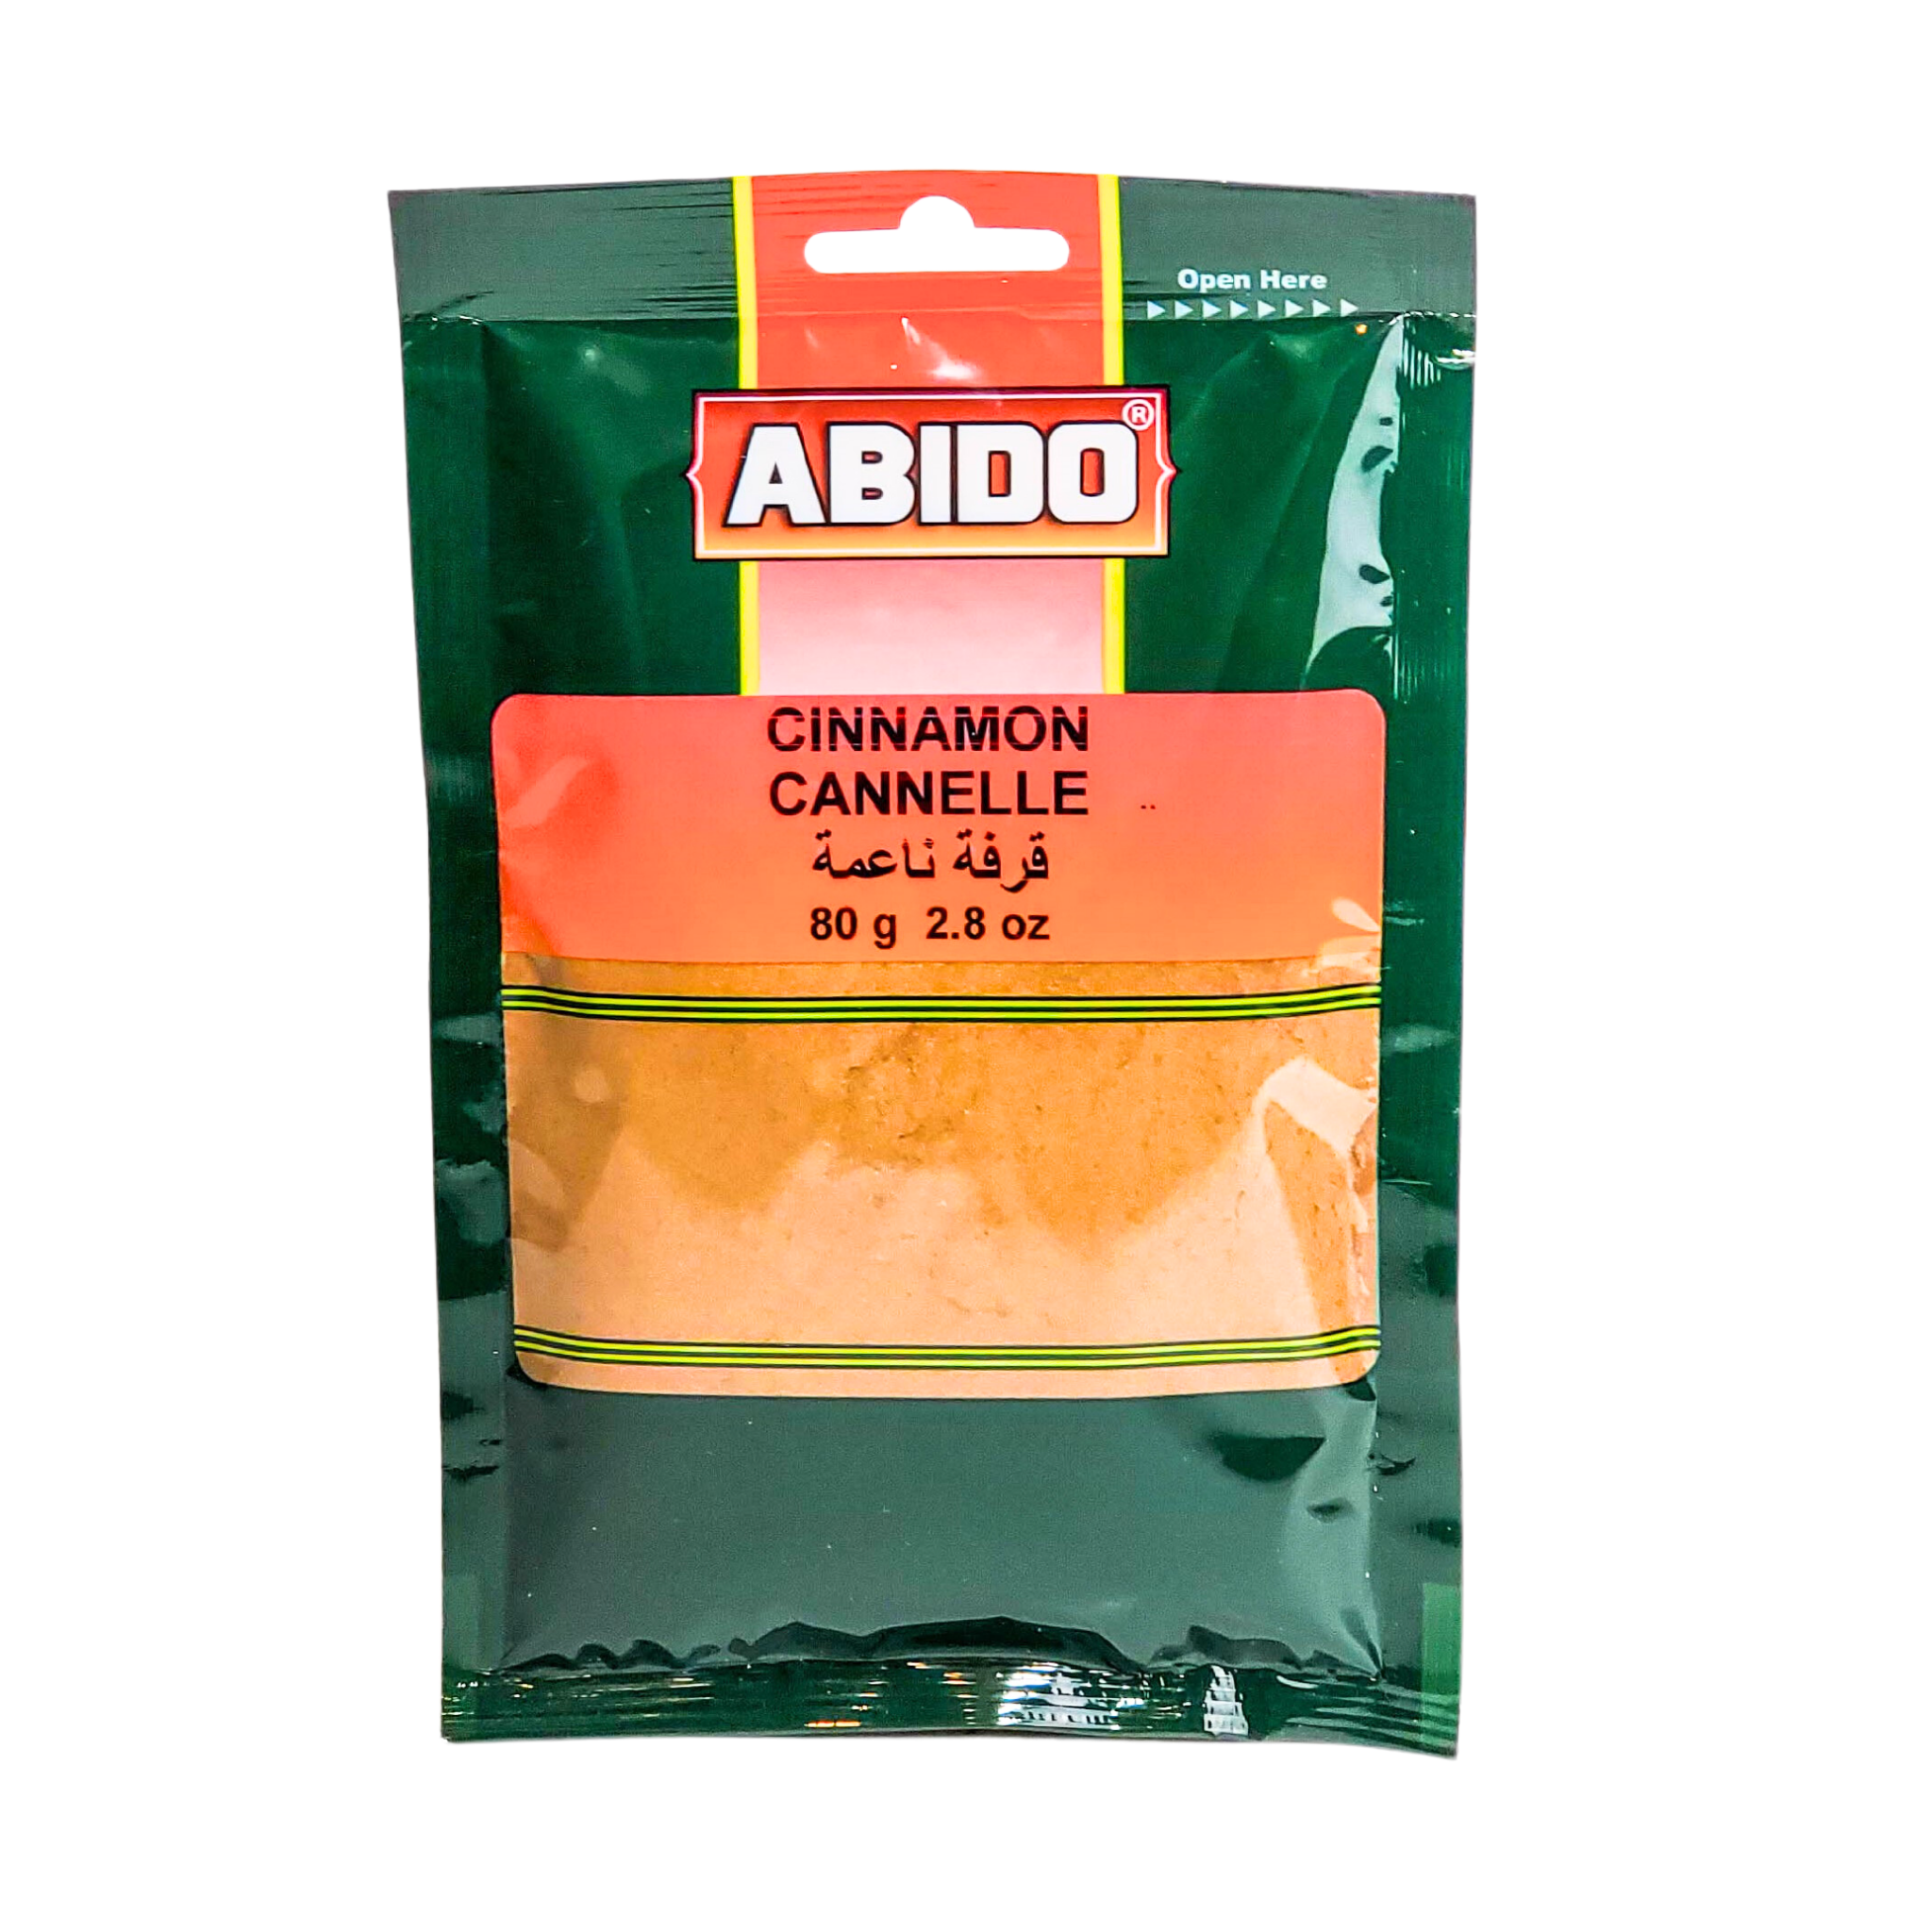 Abido Cinnamon (Cannelle) 80g